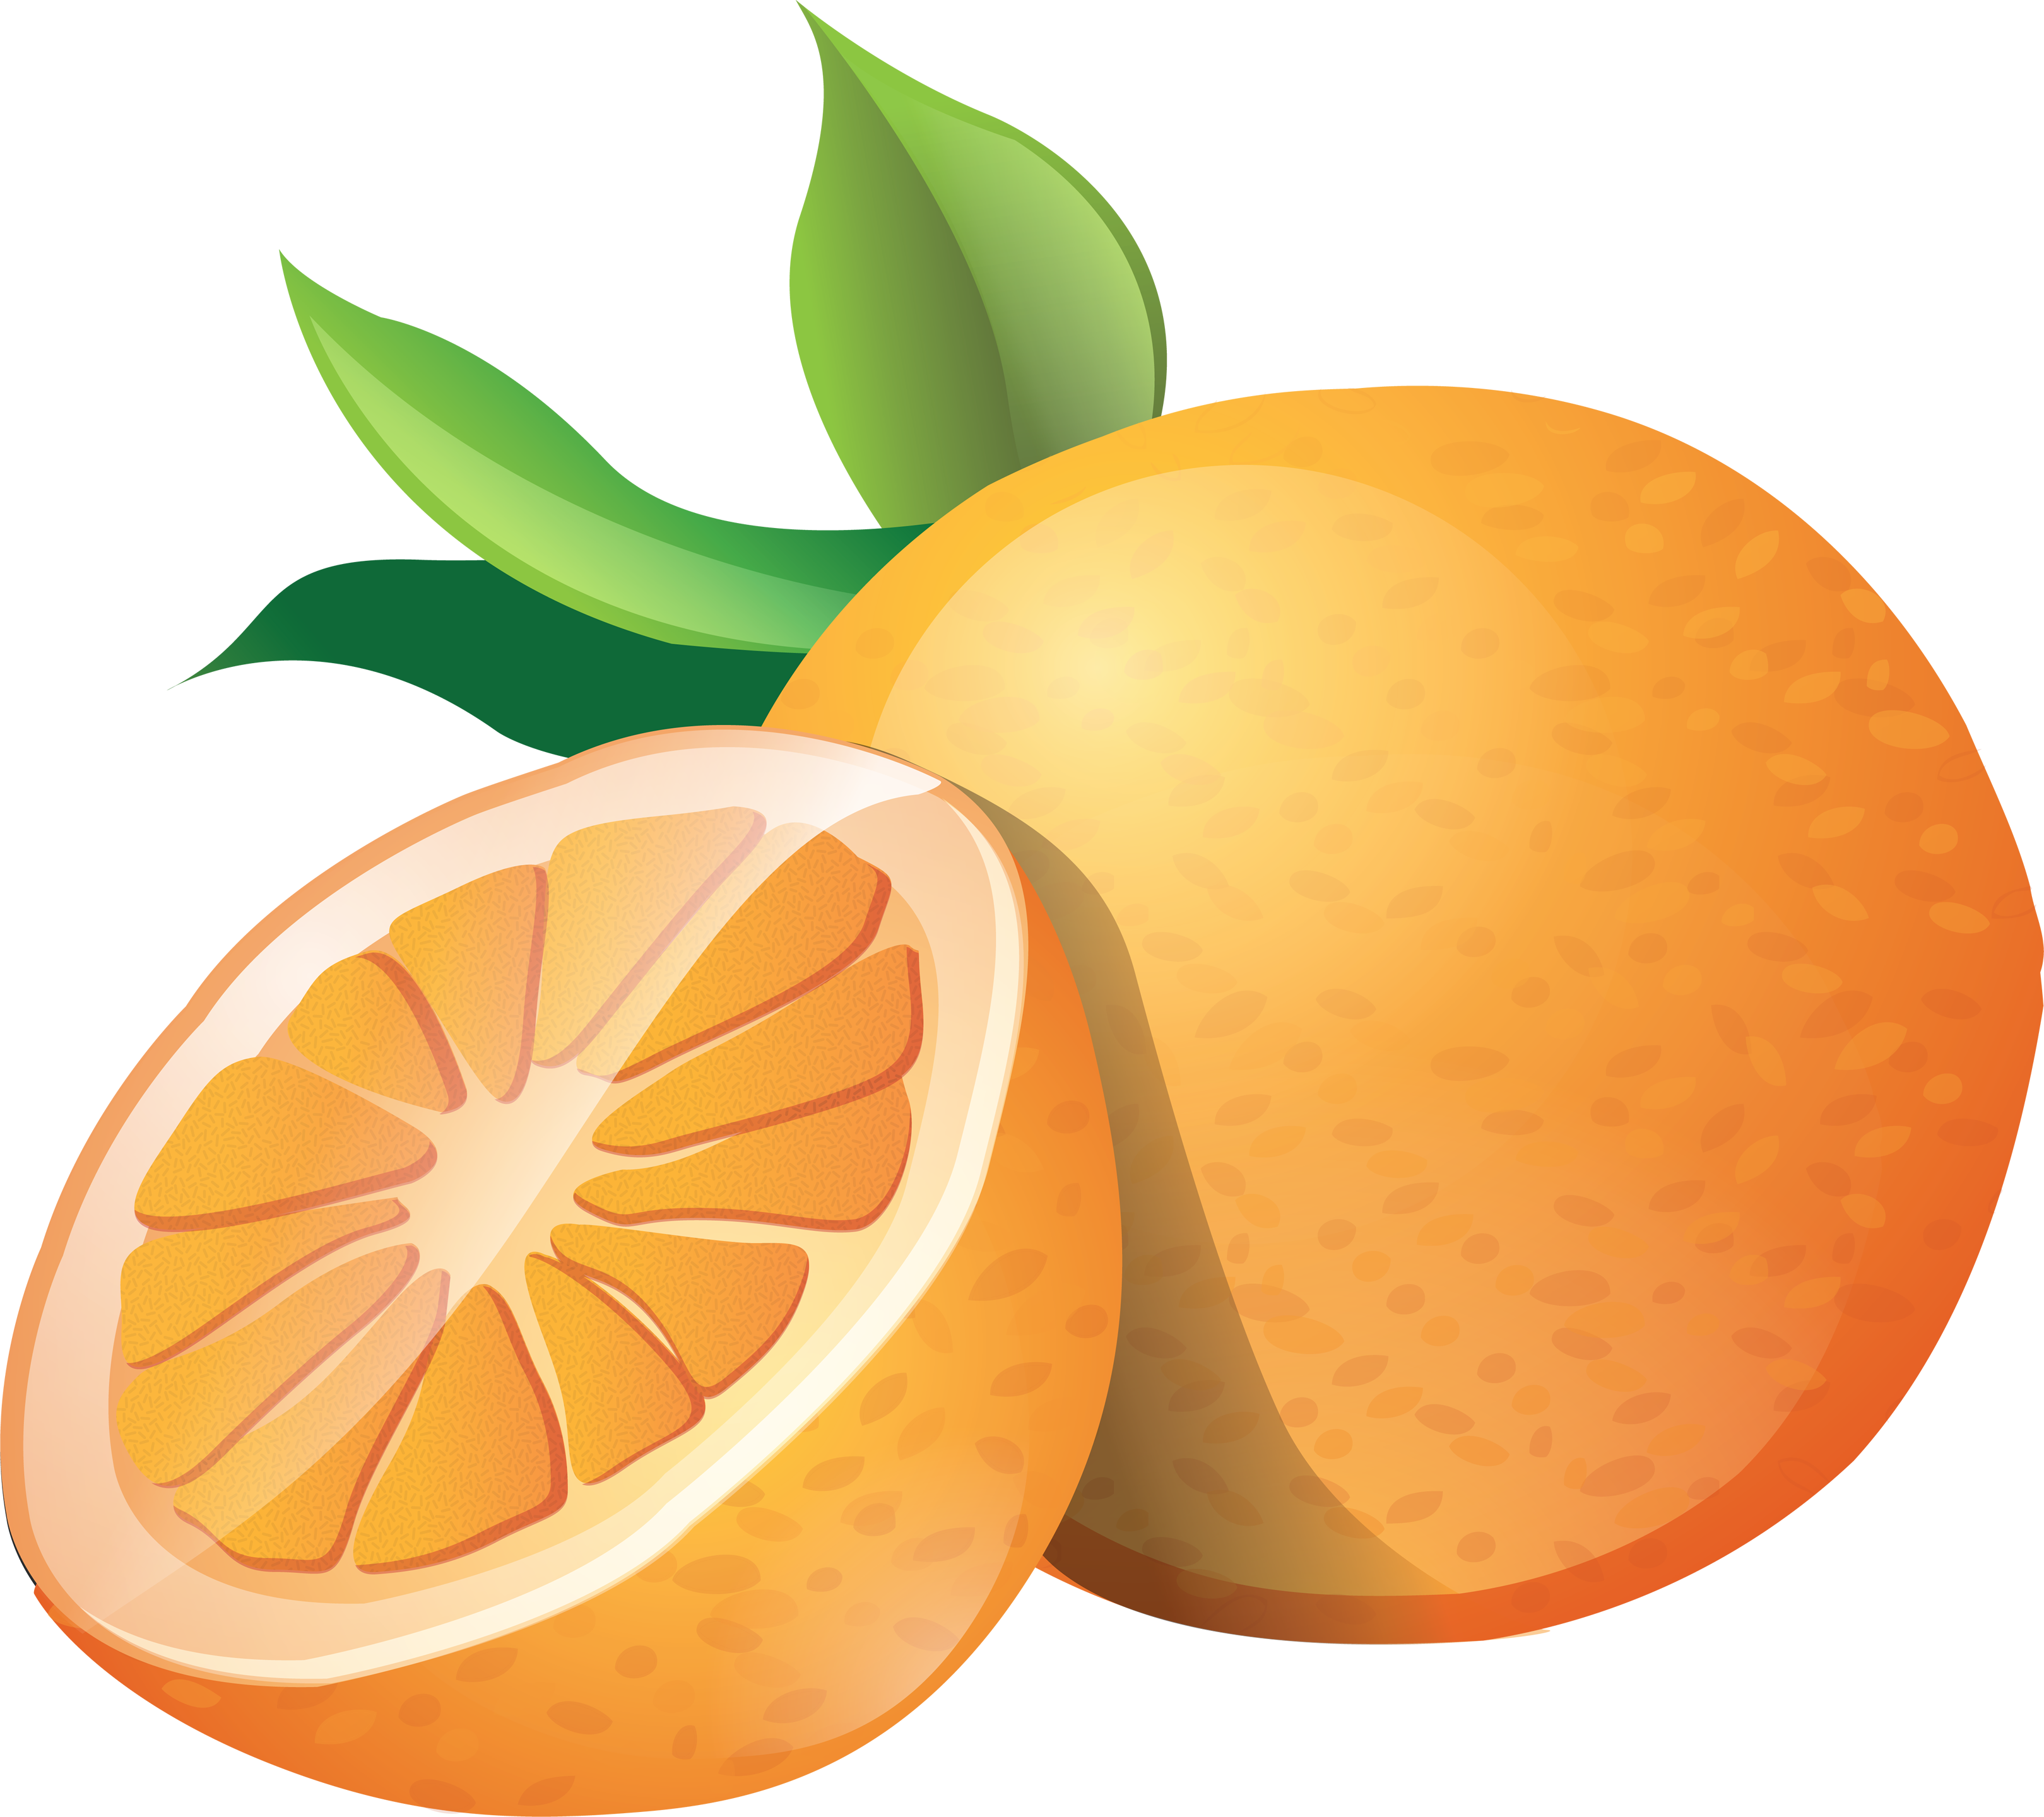 Oranges PNG Image - PurePNG | Free transparent CC0 PNG ...